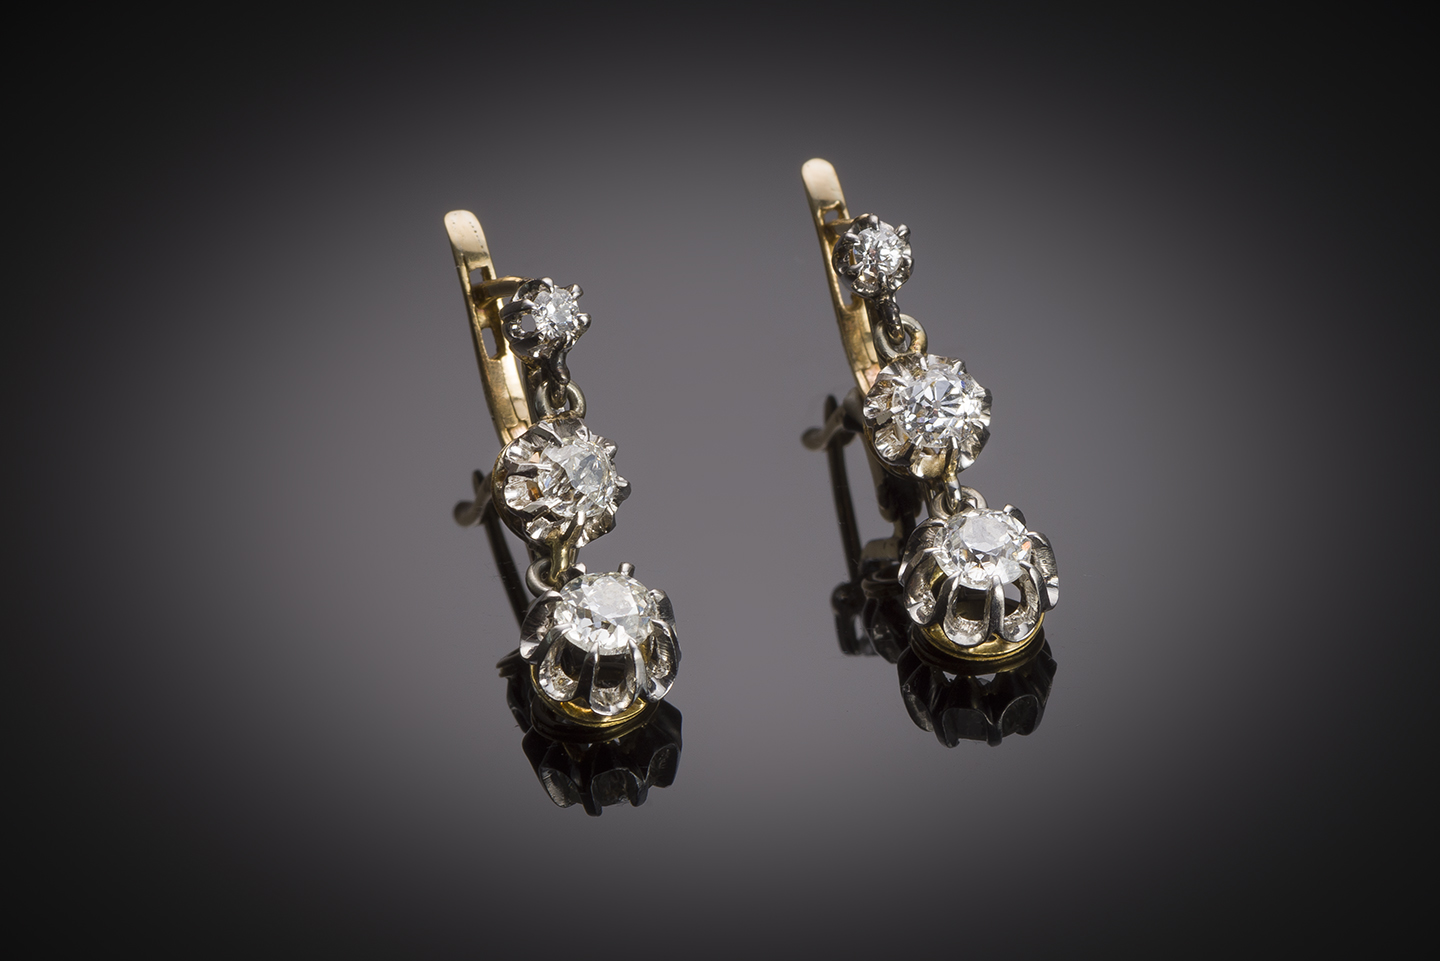 Late 19th century diamond earrings (1.50 carat)-1